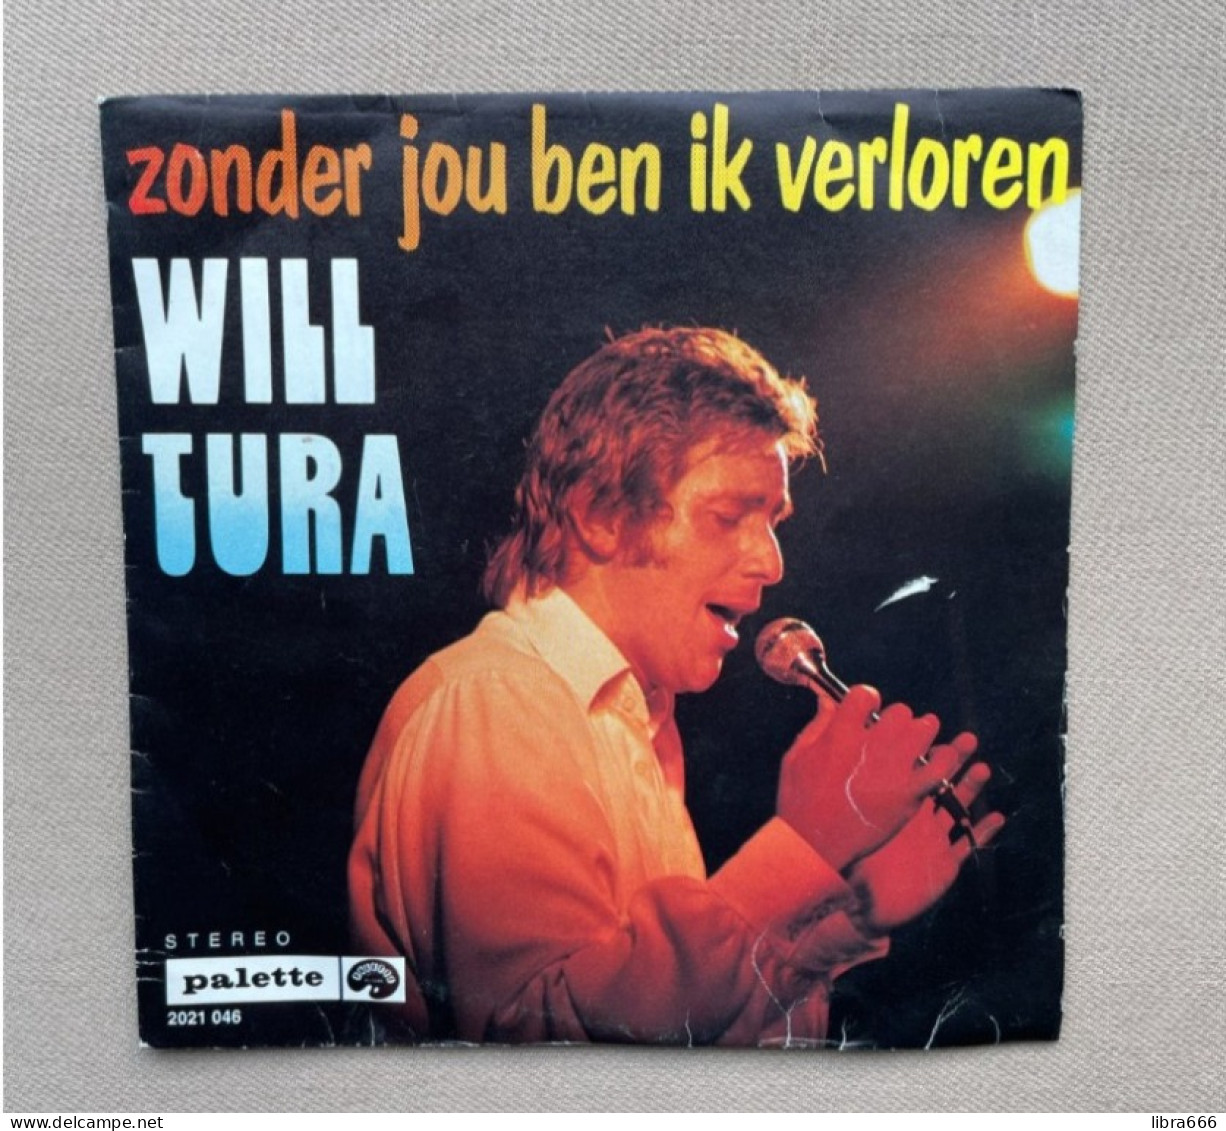 WILL TURA  - A. Zonder Jou Ben Ik Verloren B. Jij Bent De Mooiste - 1972 - Palette Records 2021 046 - Other - Dutch Music